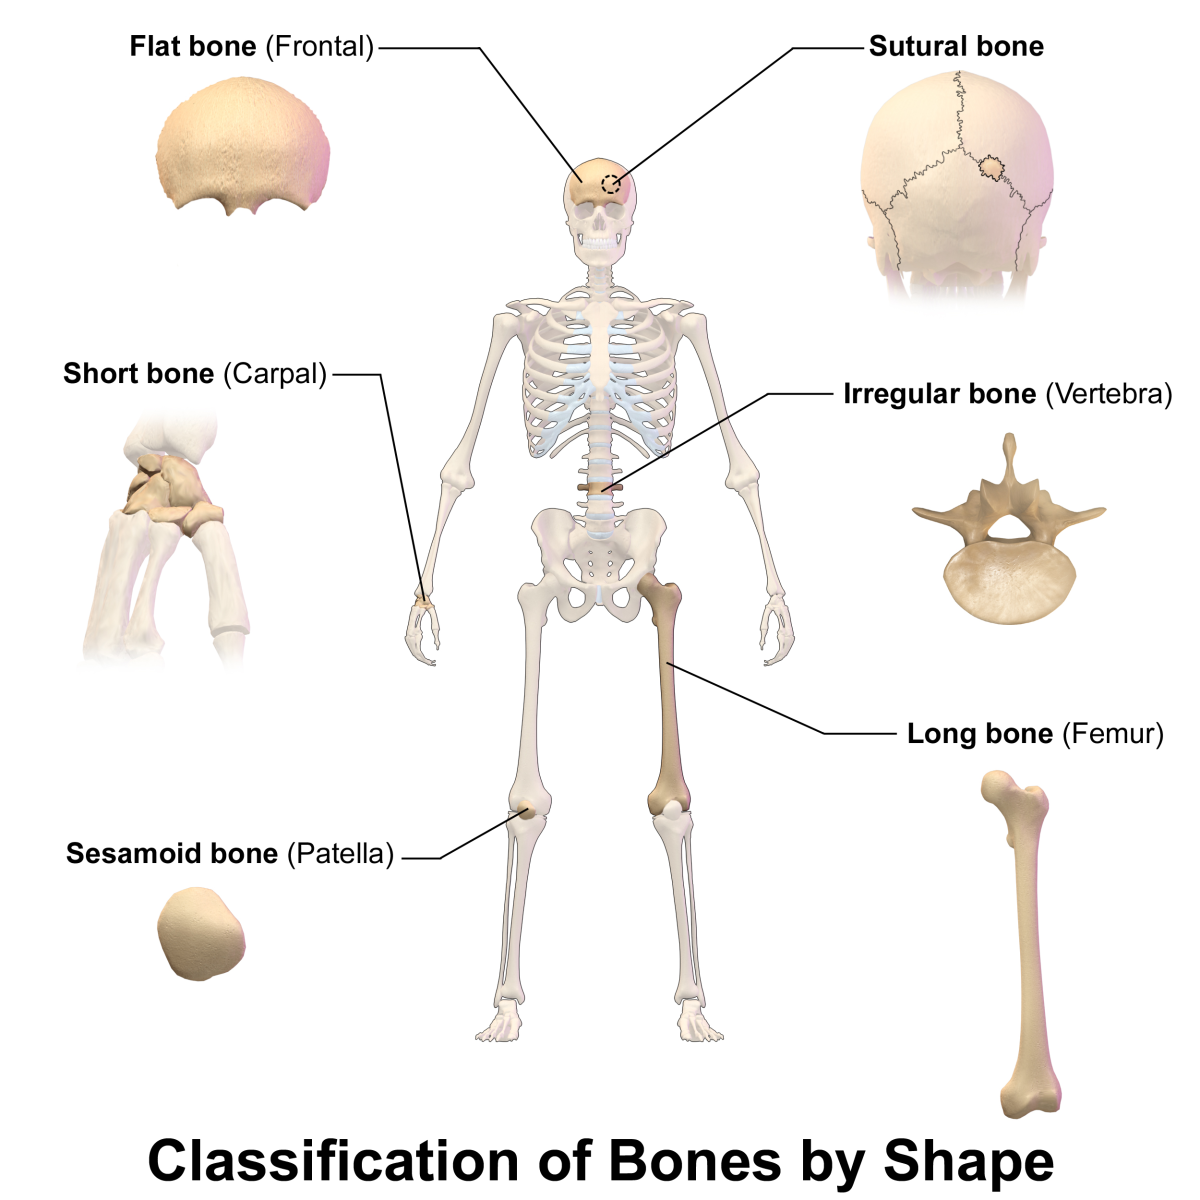 example of flat bones